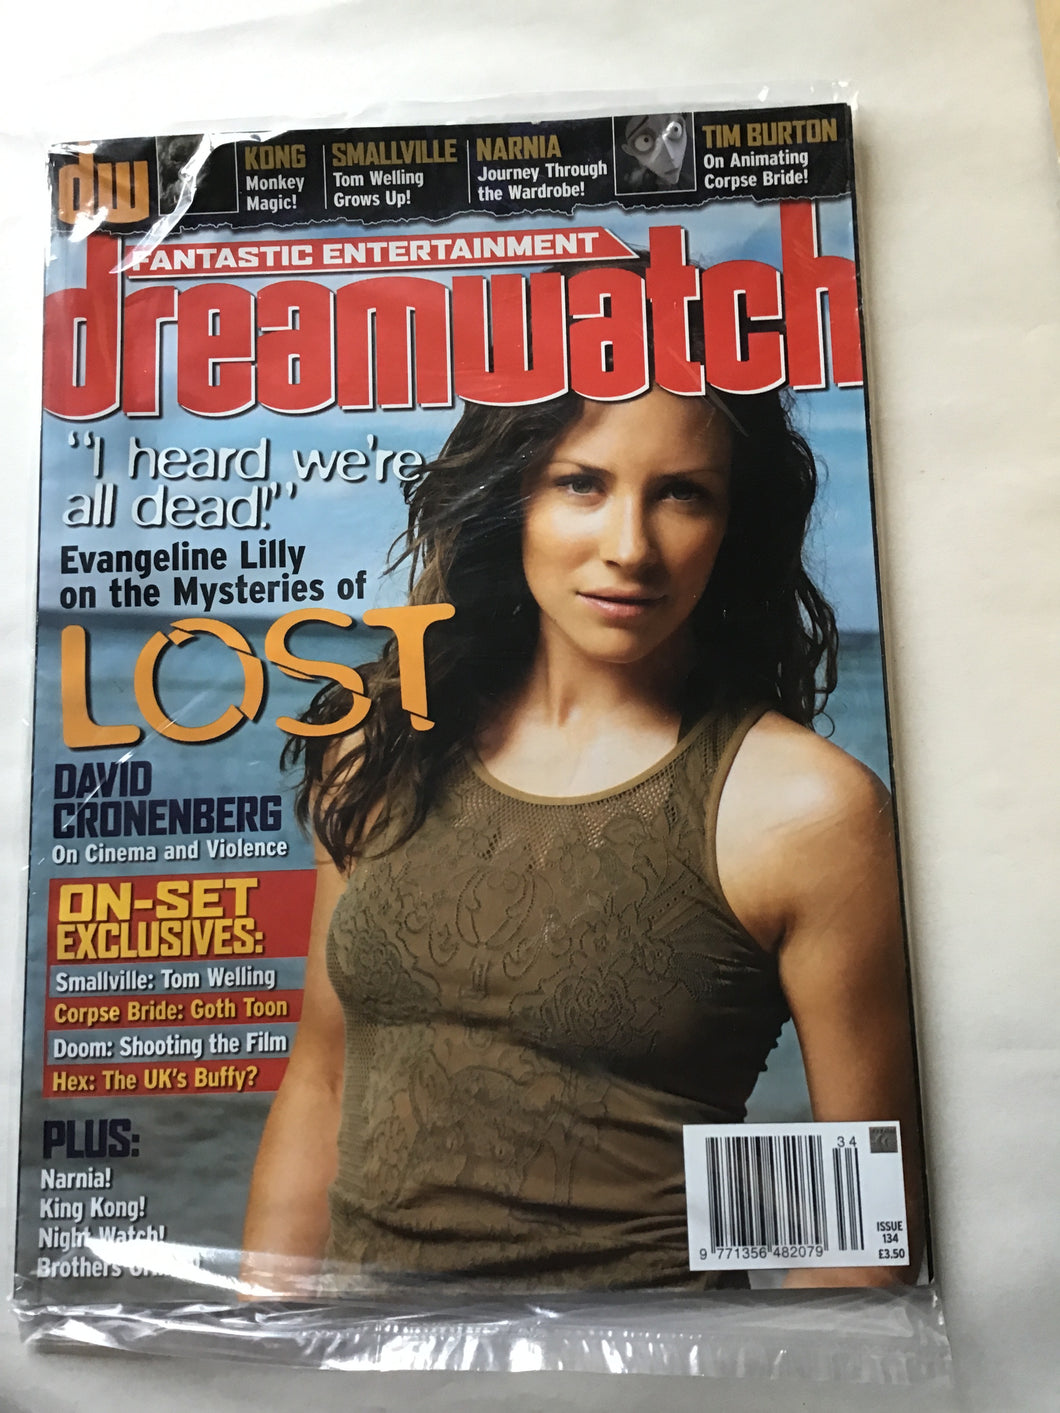 Dream watch magazine November 2005 issue 134 lost small Ville doom hex Narnia Tim Burton Kong